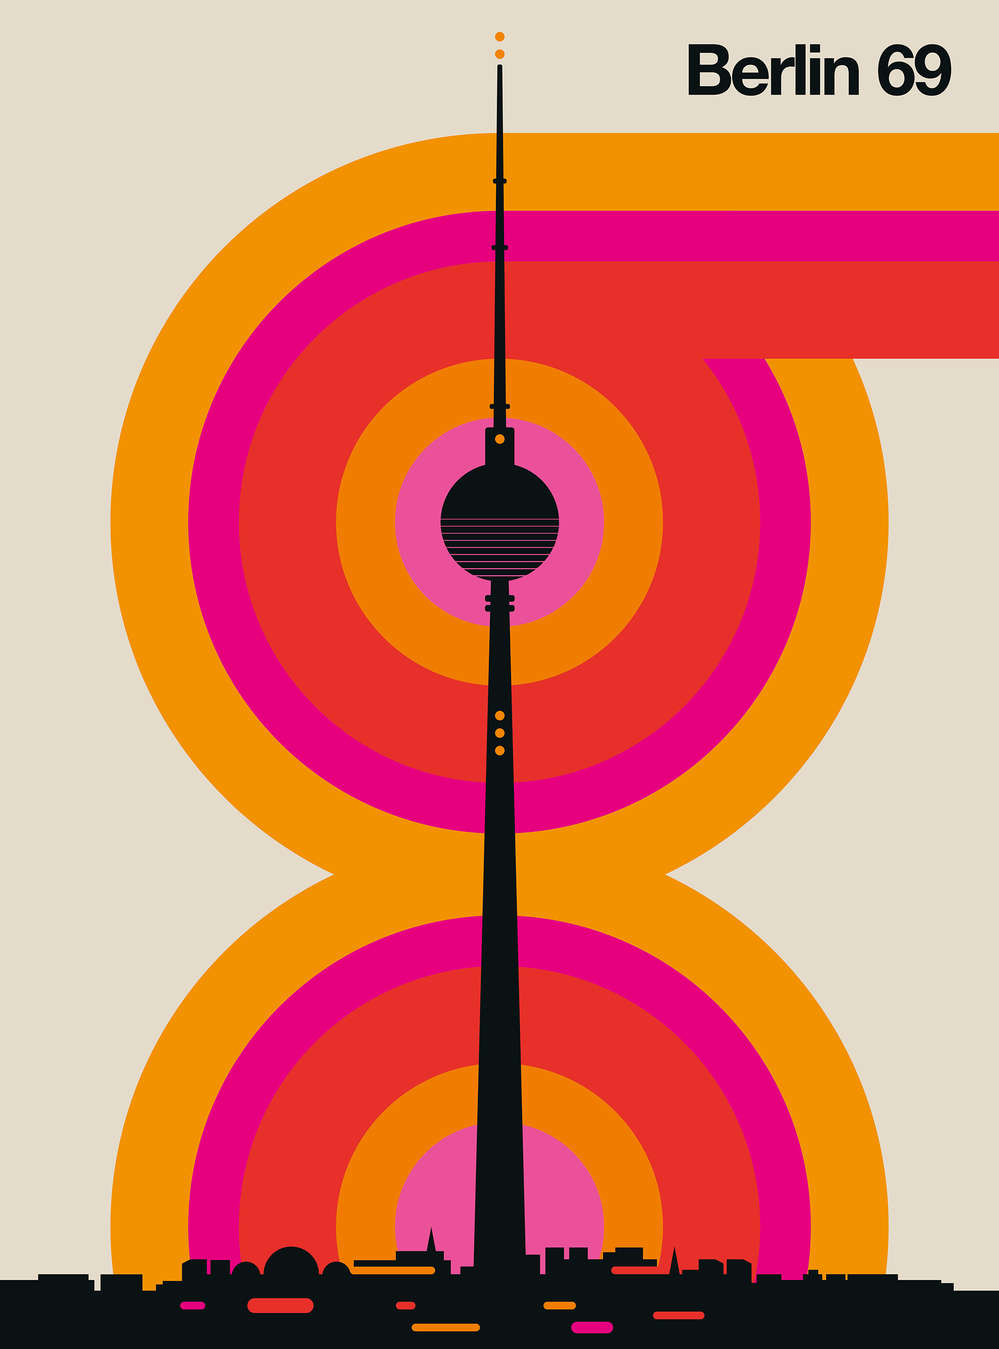             Berlin Radio Tower mural in 60s retro design
        